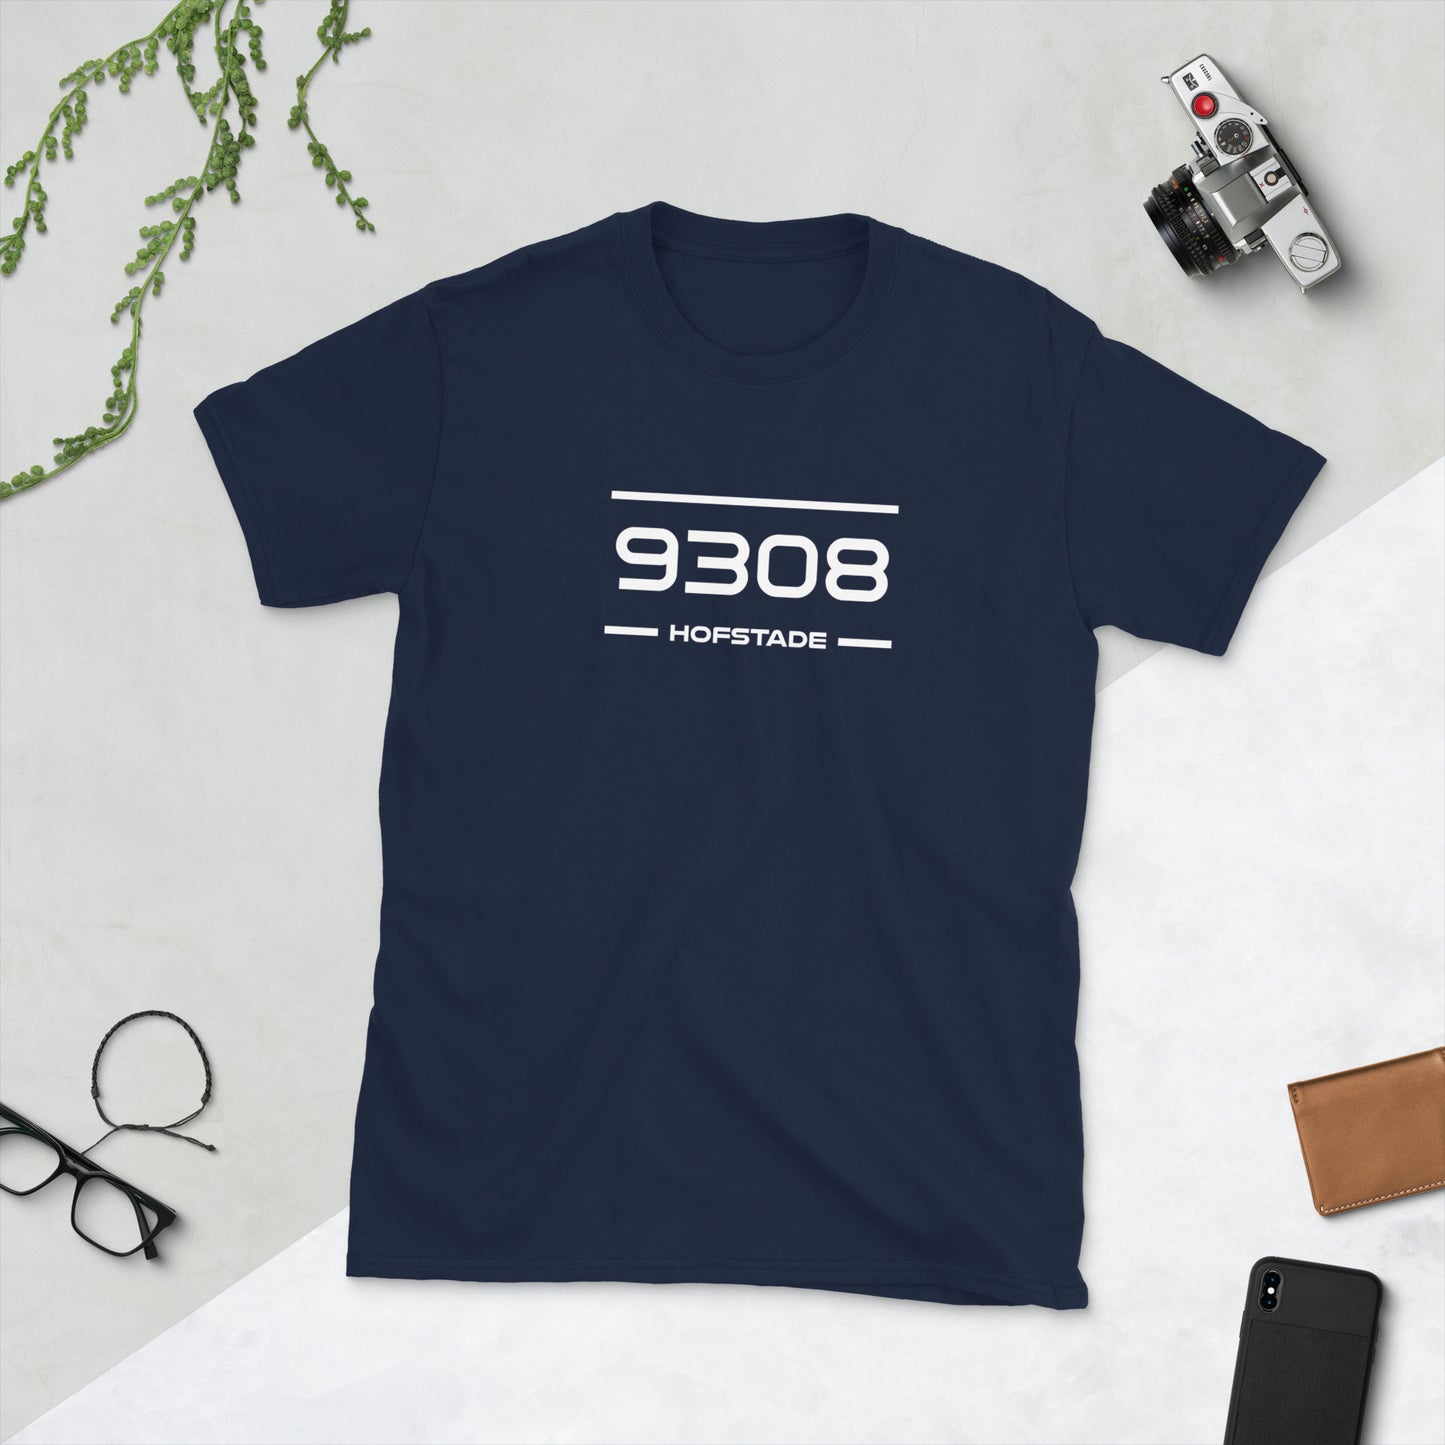 T-Shirt - 9308 - Hofstade